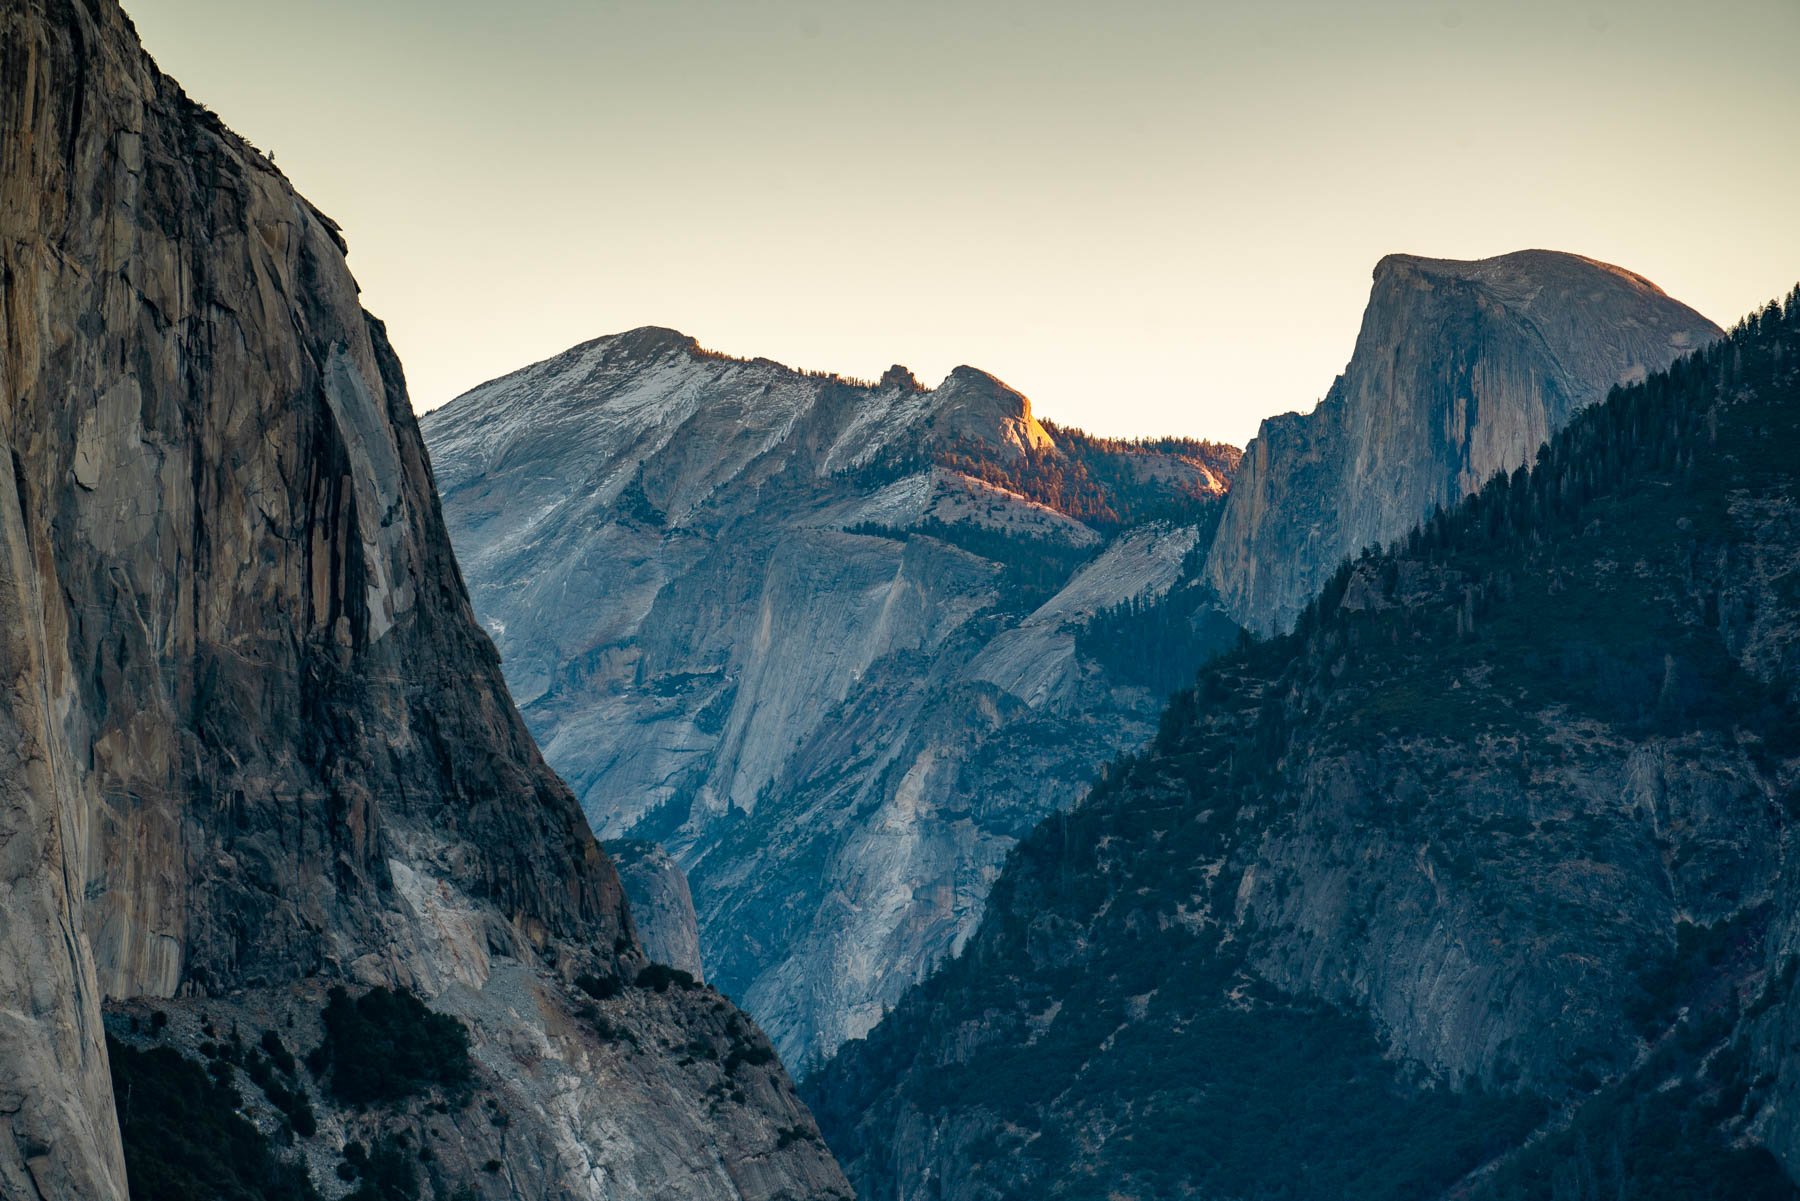 Yosemite National Park Facts
